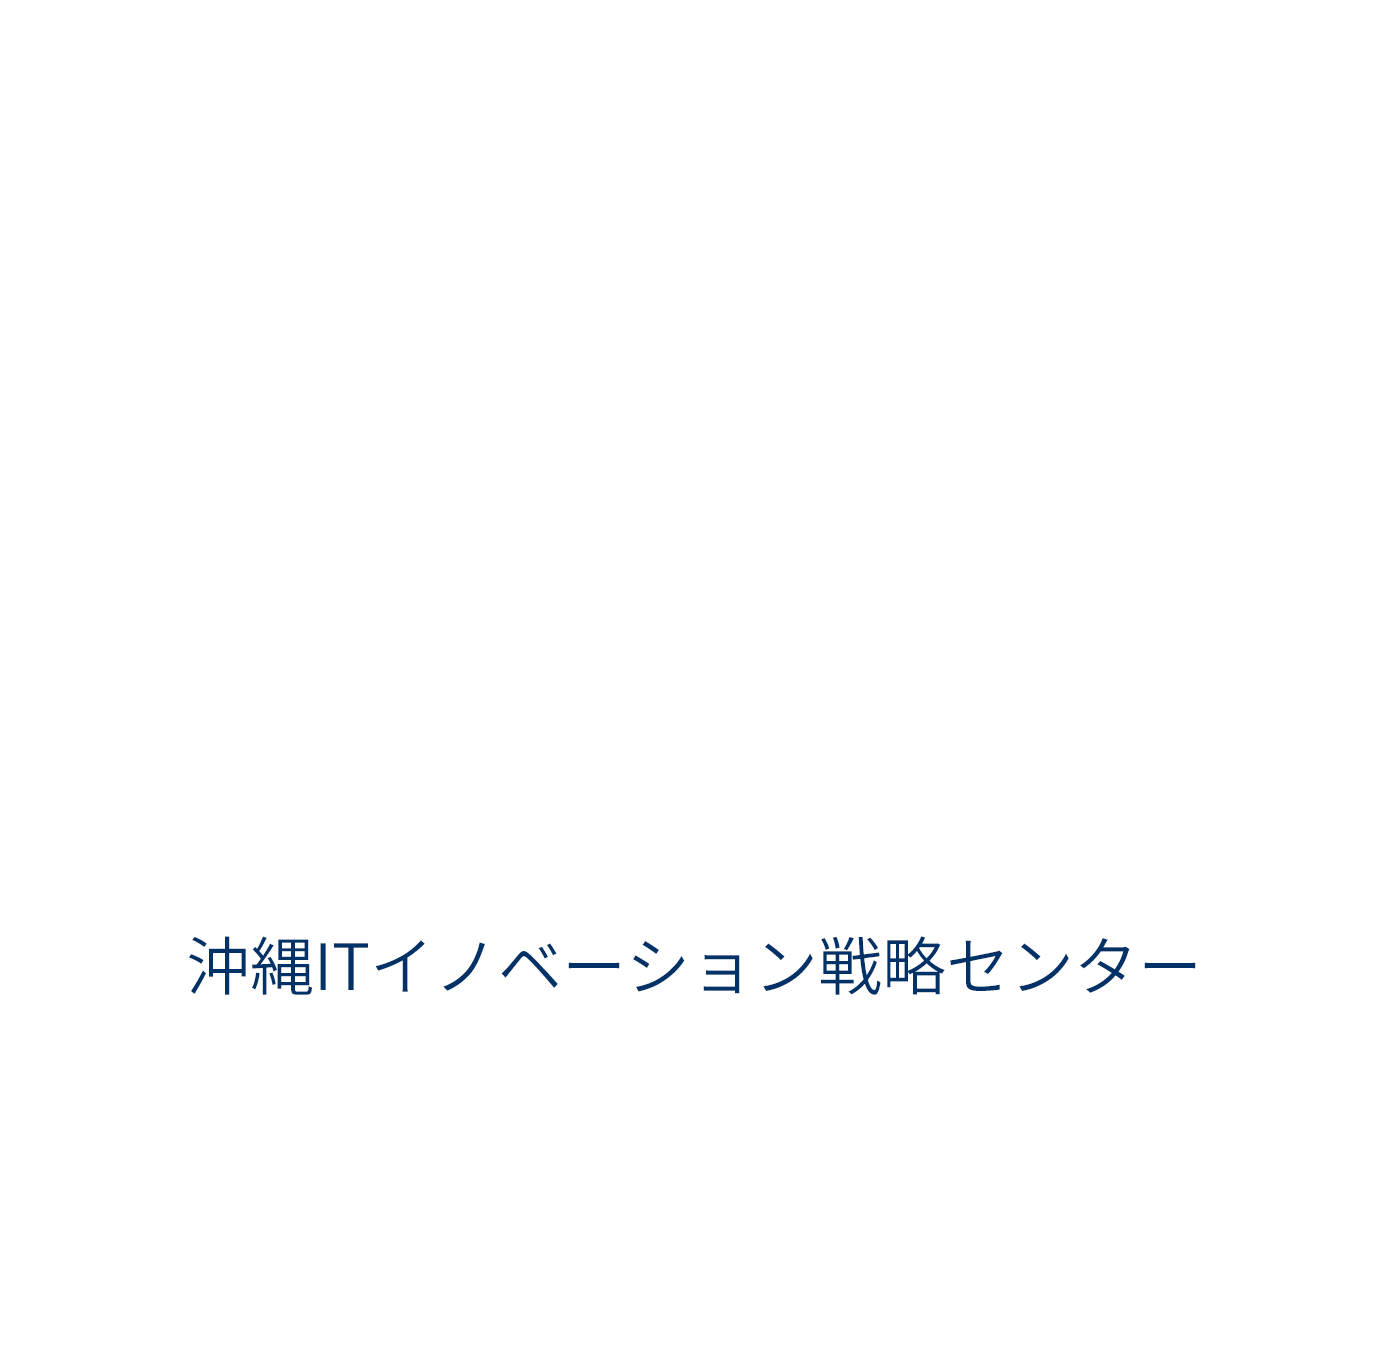 IT Innovation and Strategy Center Okinawa「沖縄ITイノベーション戦略センター」 | 我们将共同『在冲绳』开创一场活用IT革新，并引领颠覆性创造的服务及产业